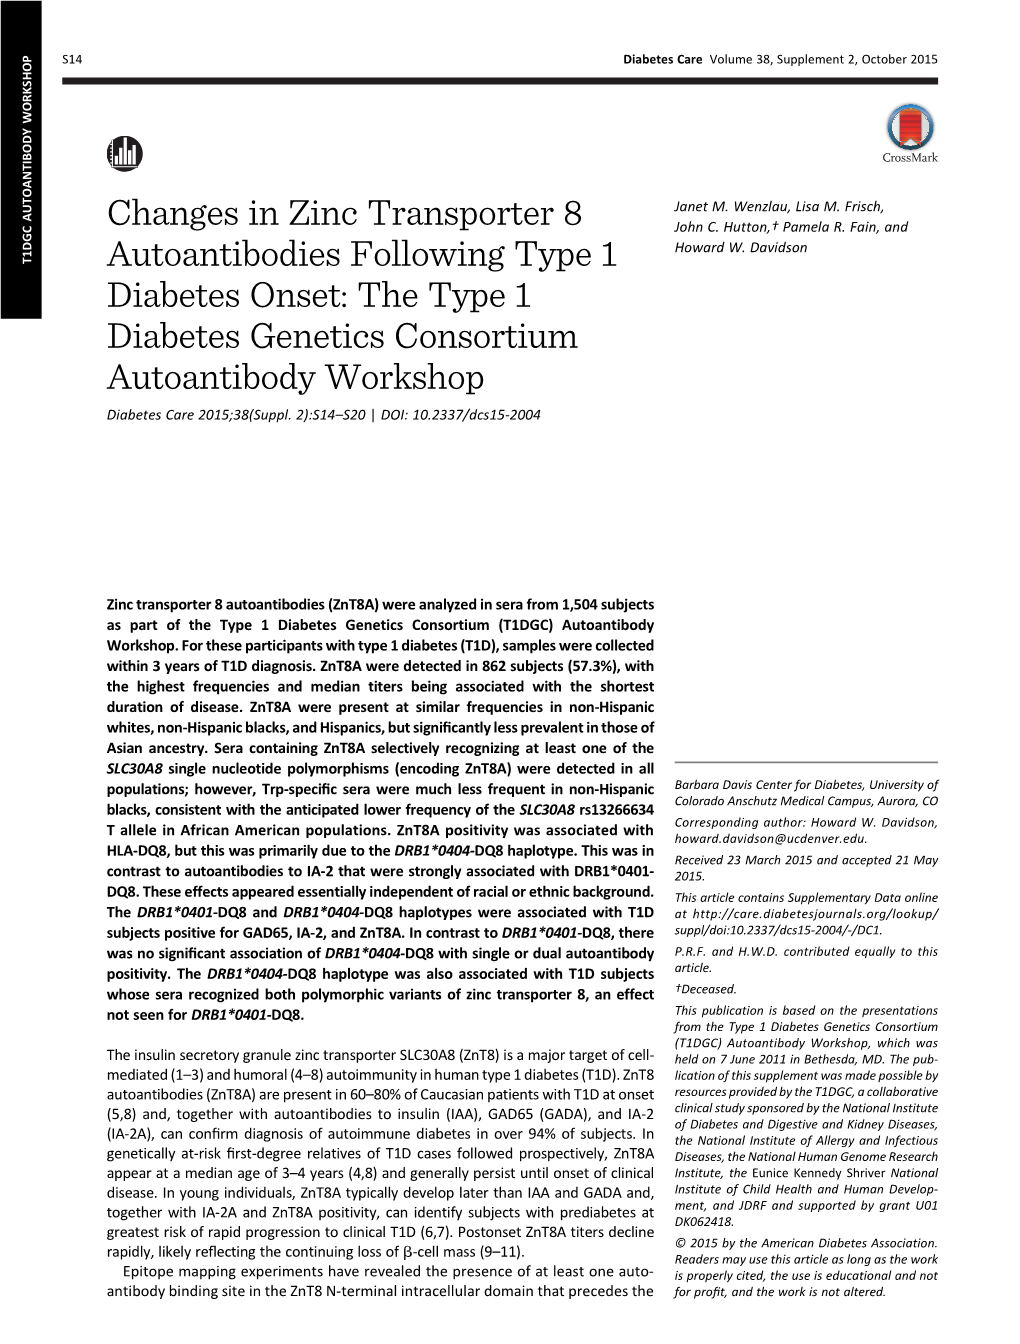 Changes in Zinc Transporter 8 Autoantibodies Following Type 1 Diabetes Onset